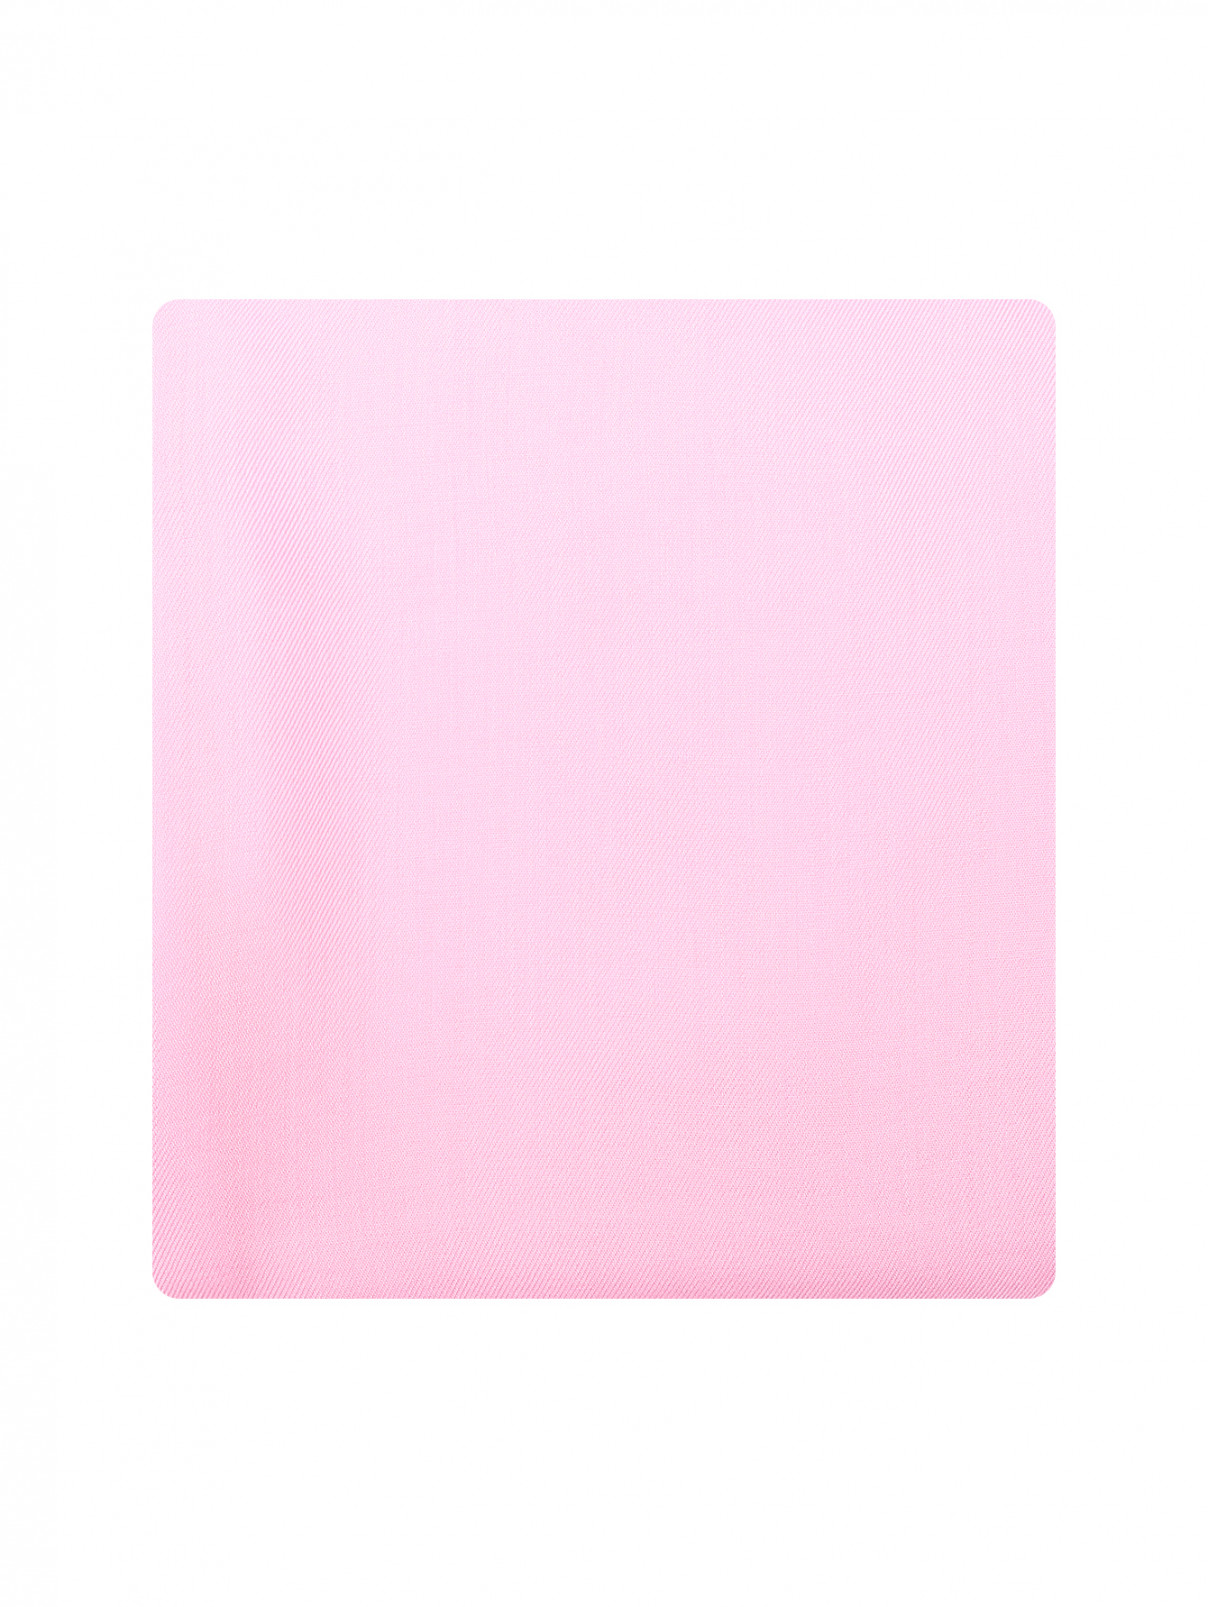 Шарф с бахромой Weekend Max Mara  –  Общий вид  – Цвет:  Розовый